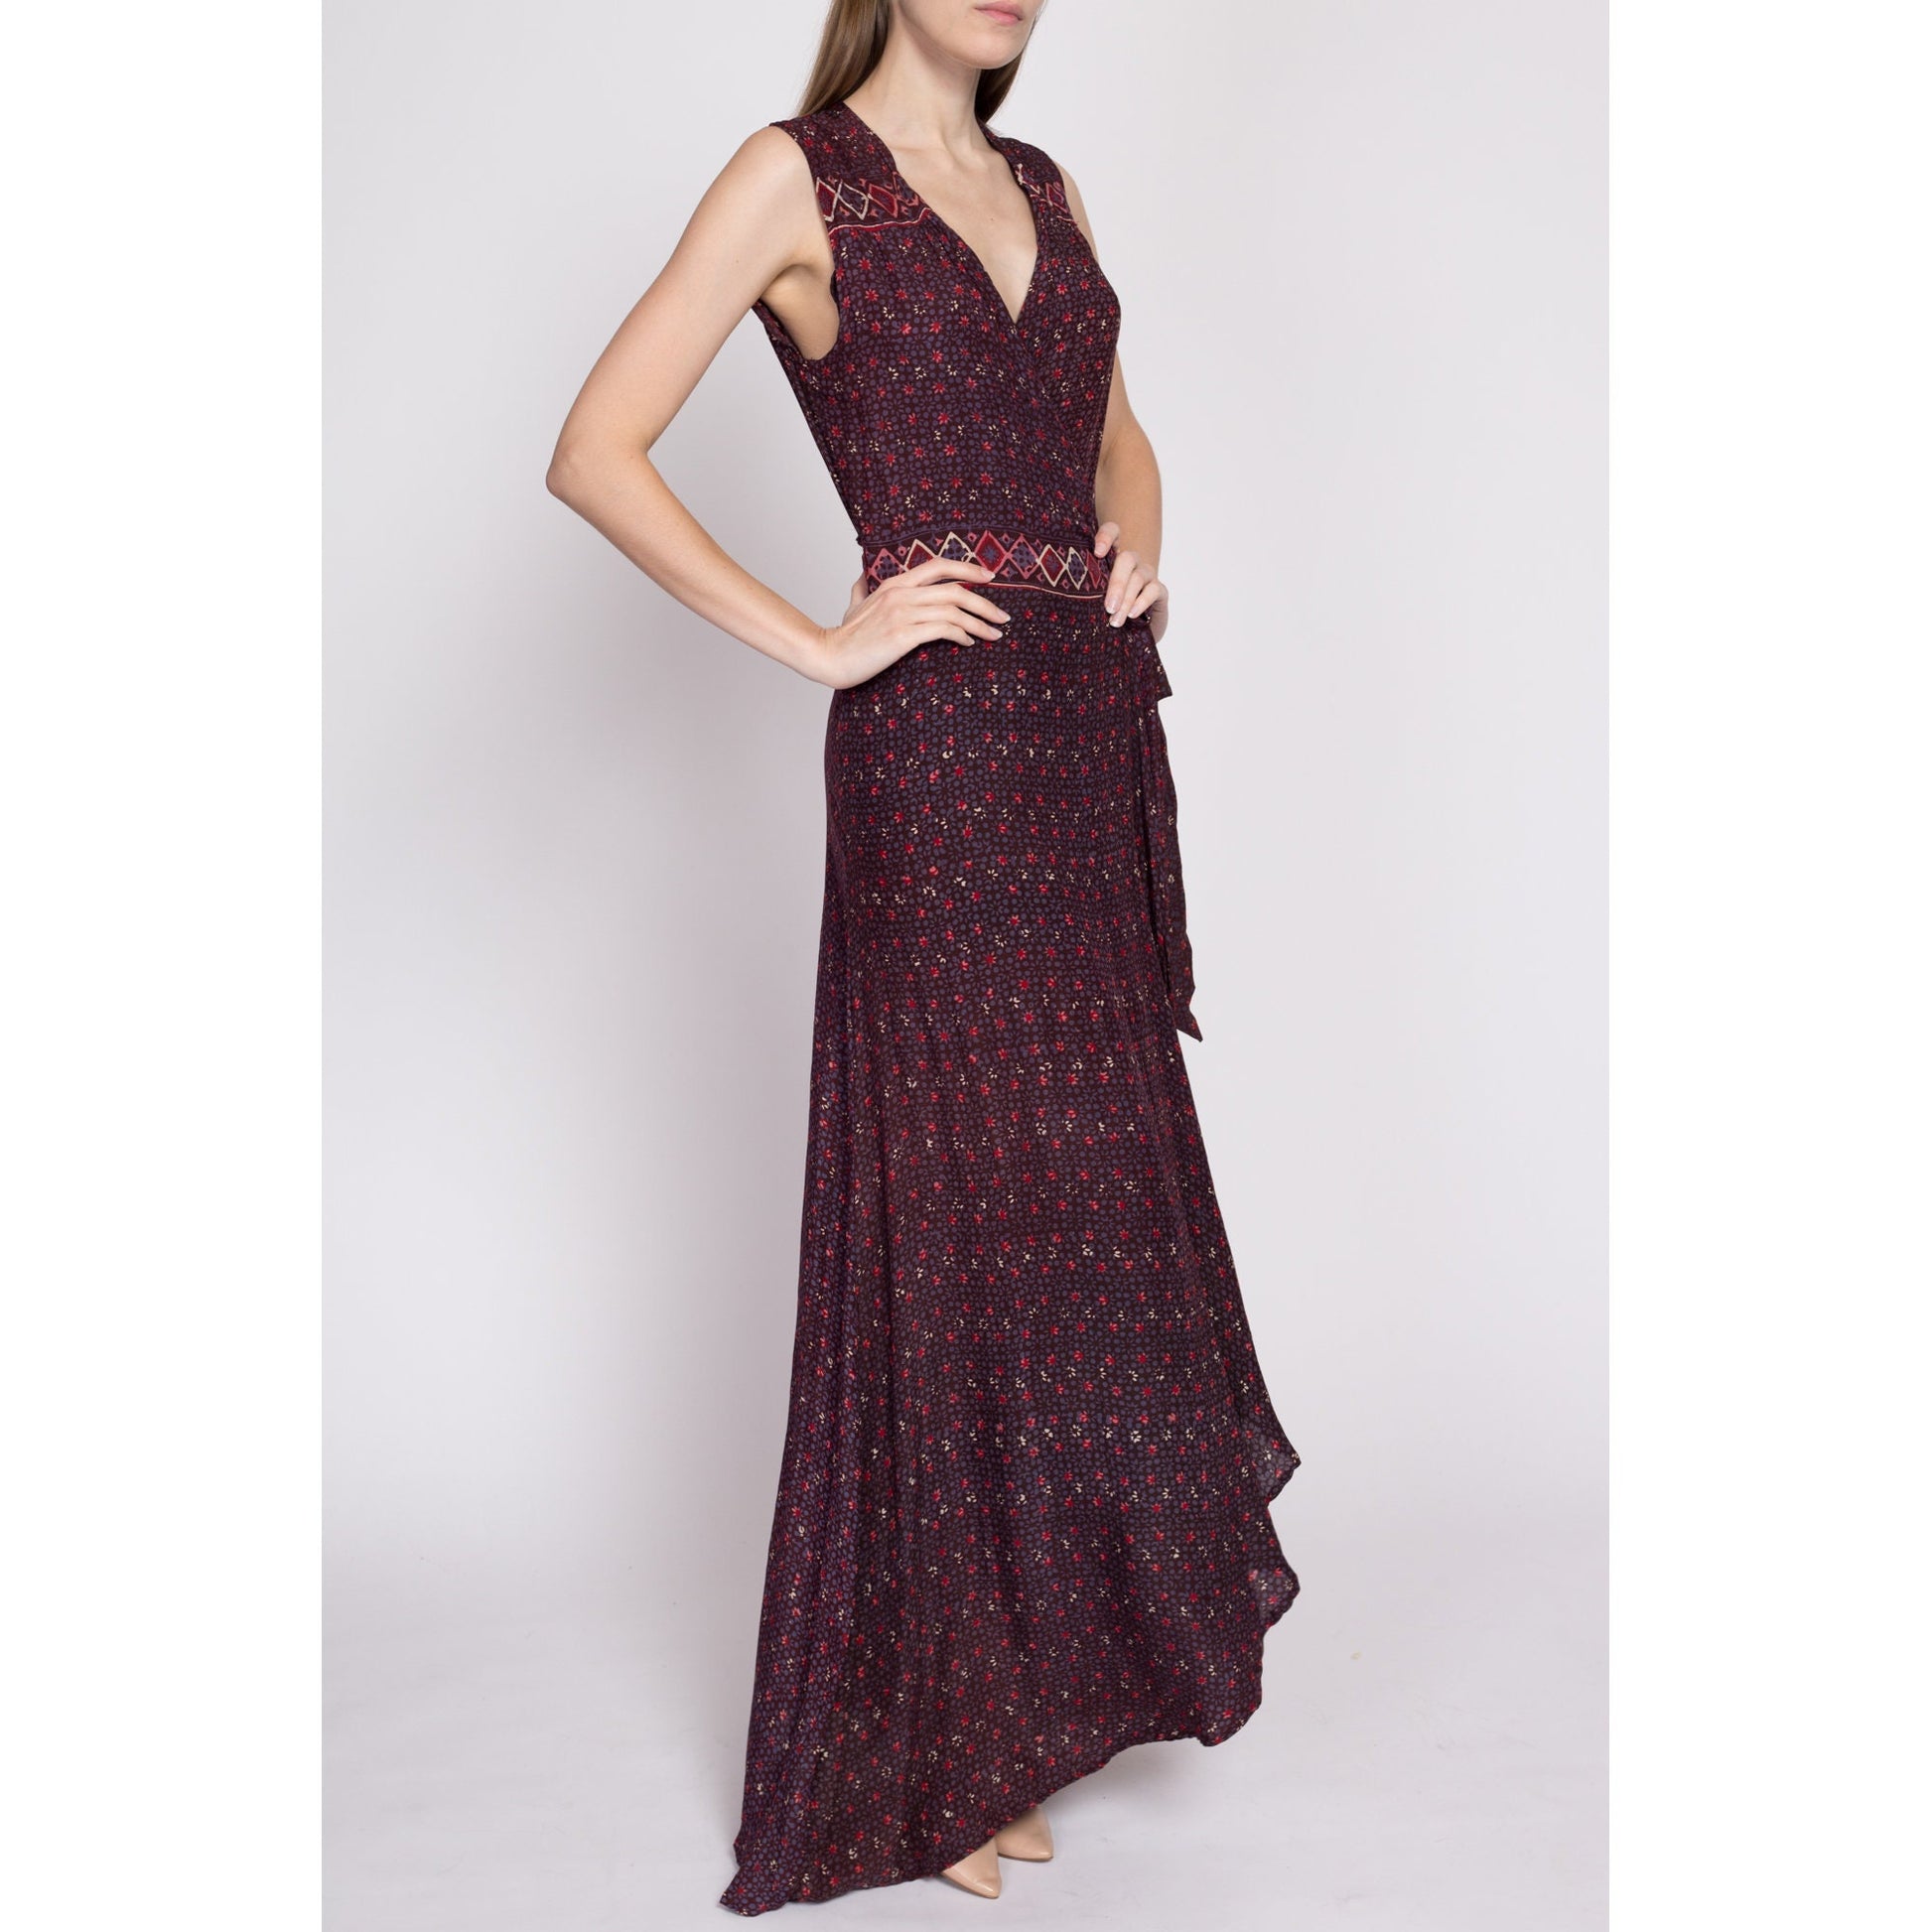 Natalie Martin Silk Maxi Wrap Dress - Small | Danika Bohemian Sleeveless Formal Flowy Summer Gown